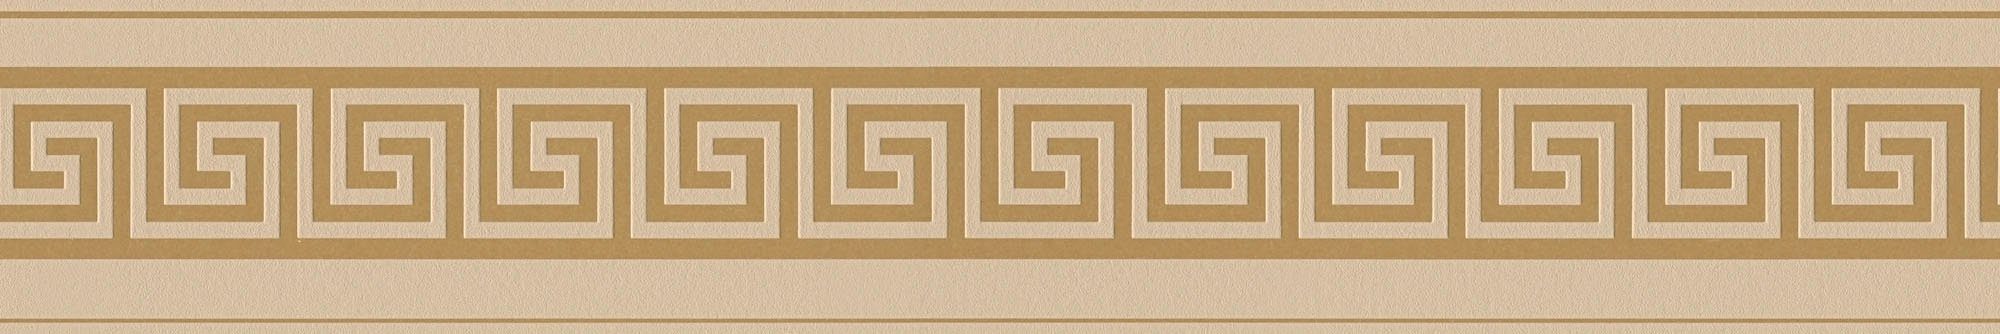 Geometrische Bordüre A.S. Motiv, Bordüre Only gold/goldfarben Création Metallic Tapete grafisch, 11, geometrisch, strukturiert, Bordüre Borders